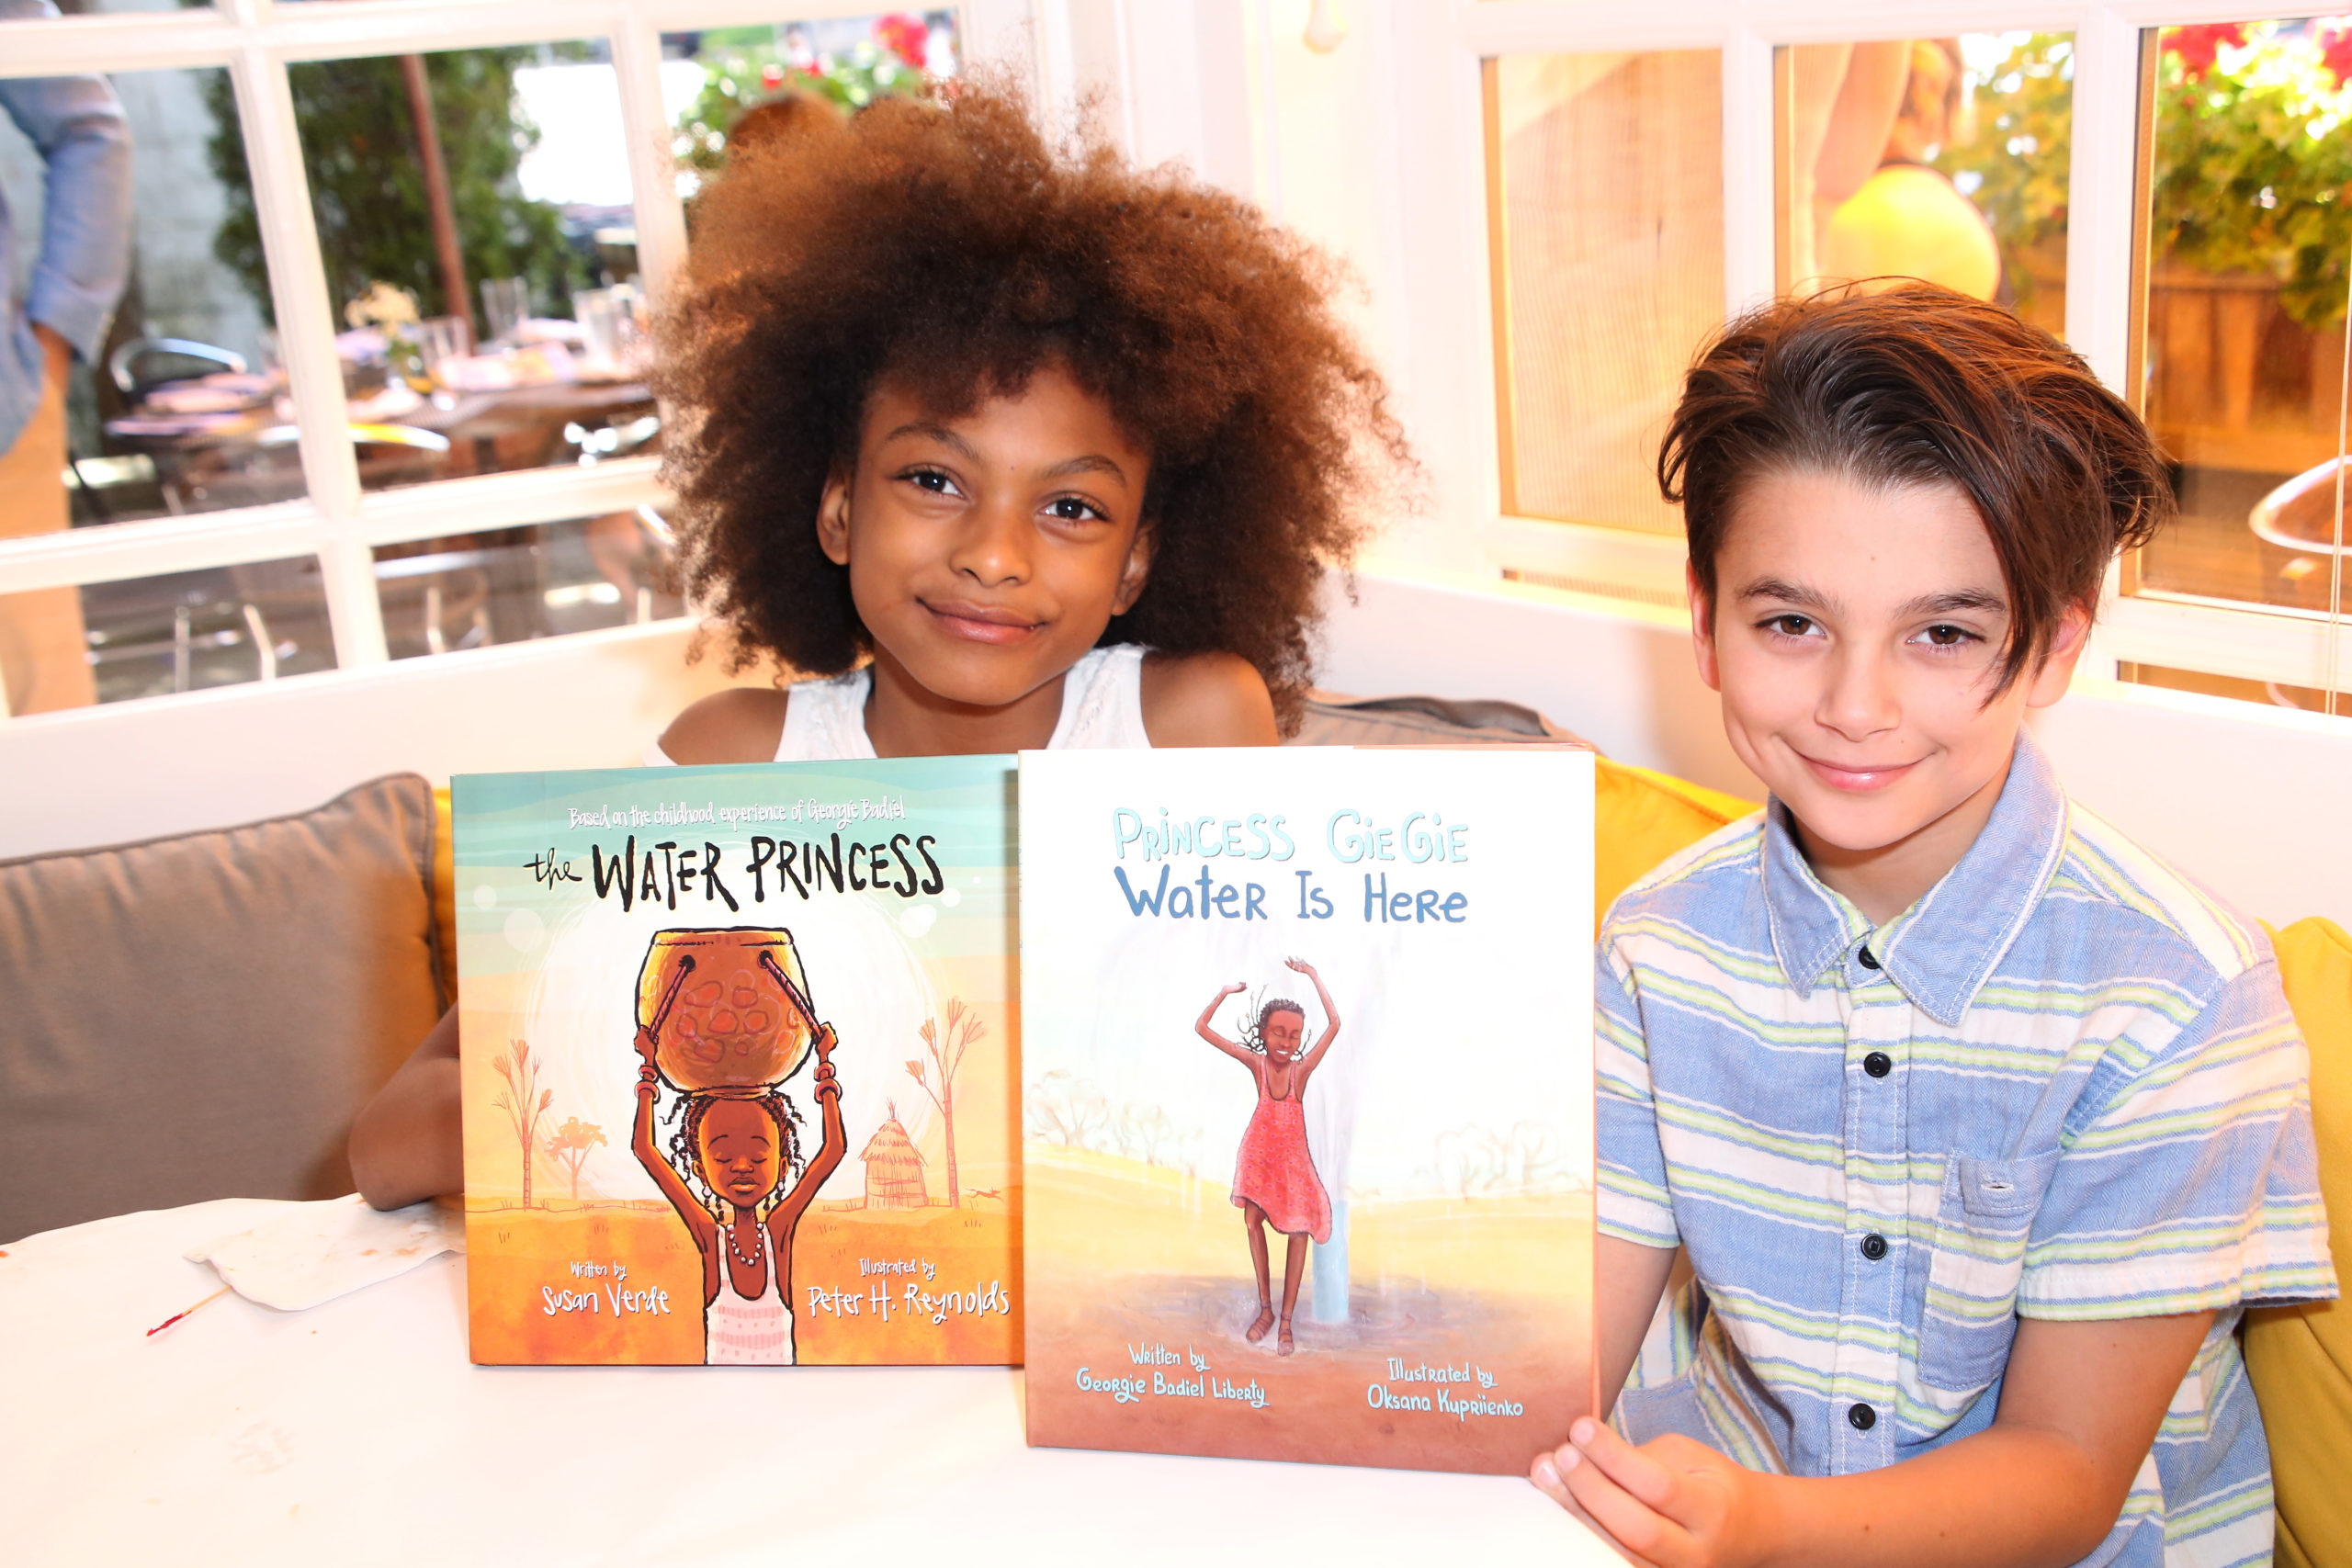 Children posing with books